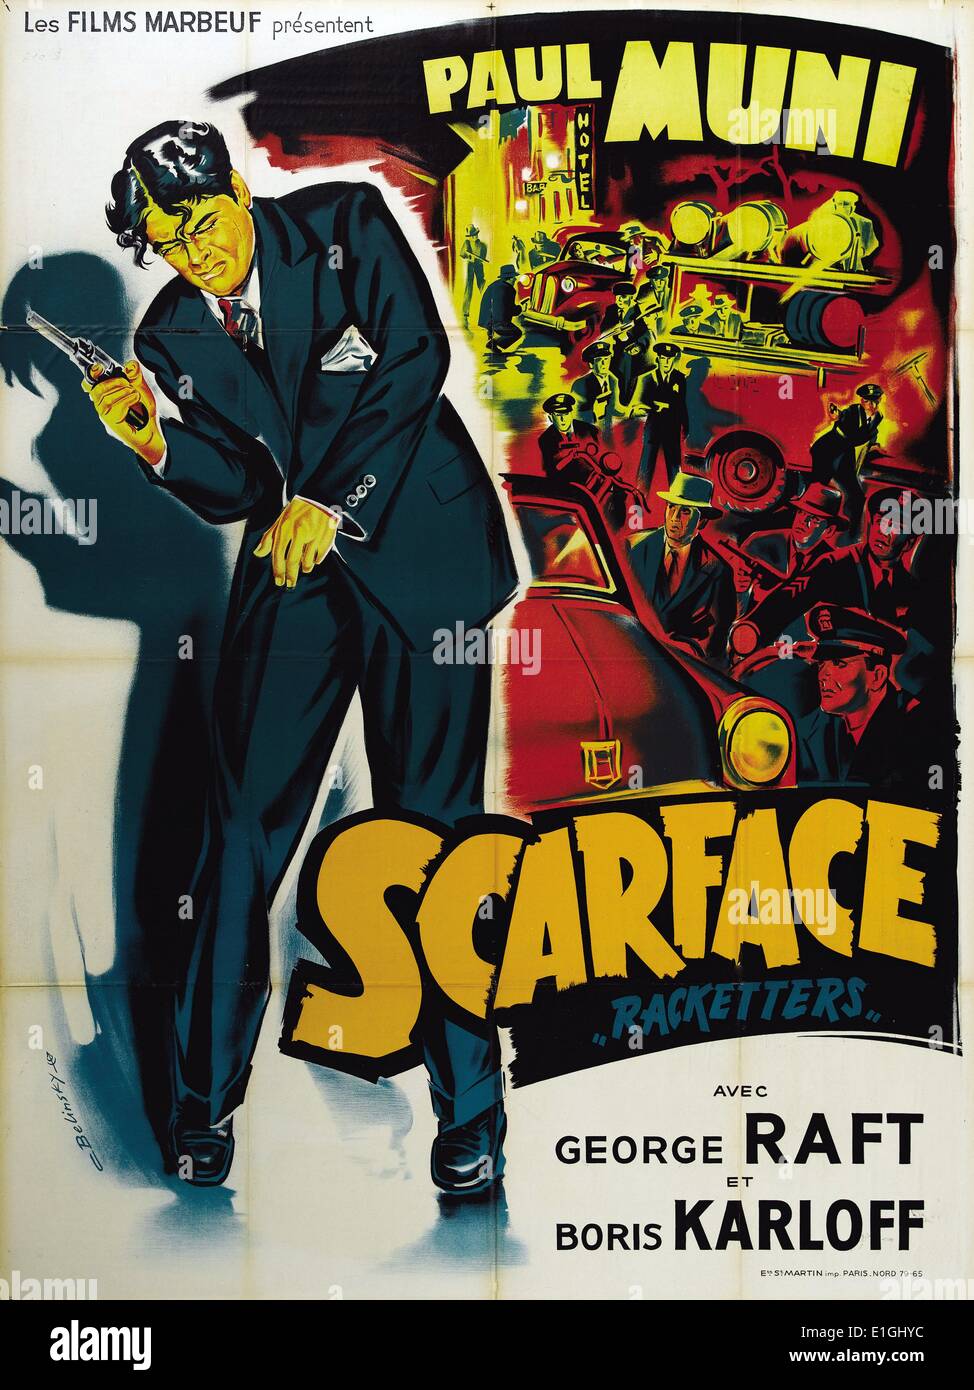 Scarface a 1932 American gangster film starring Paul Mundi. Stock Photo